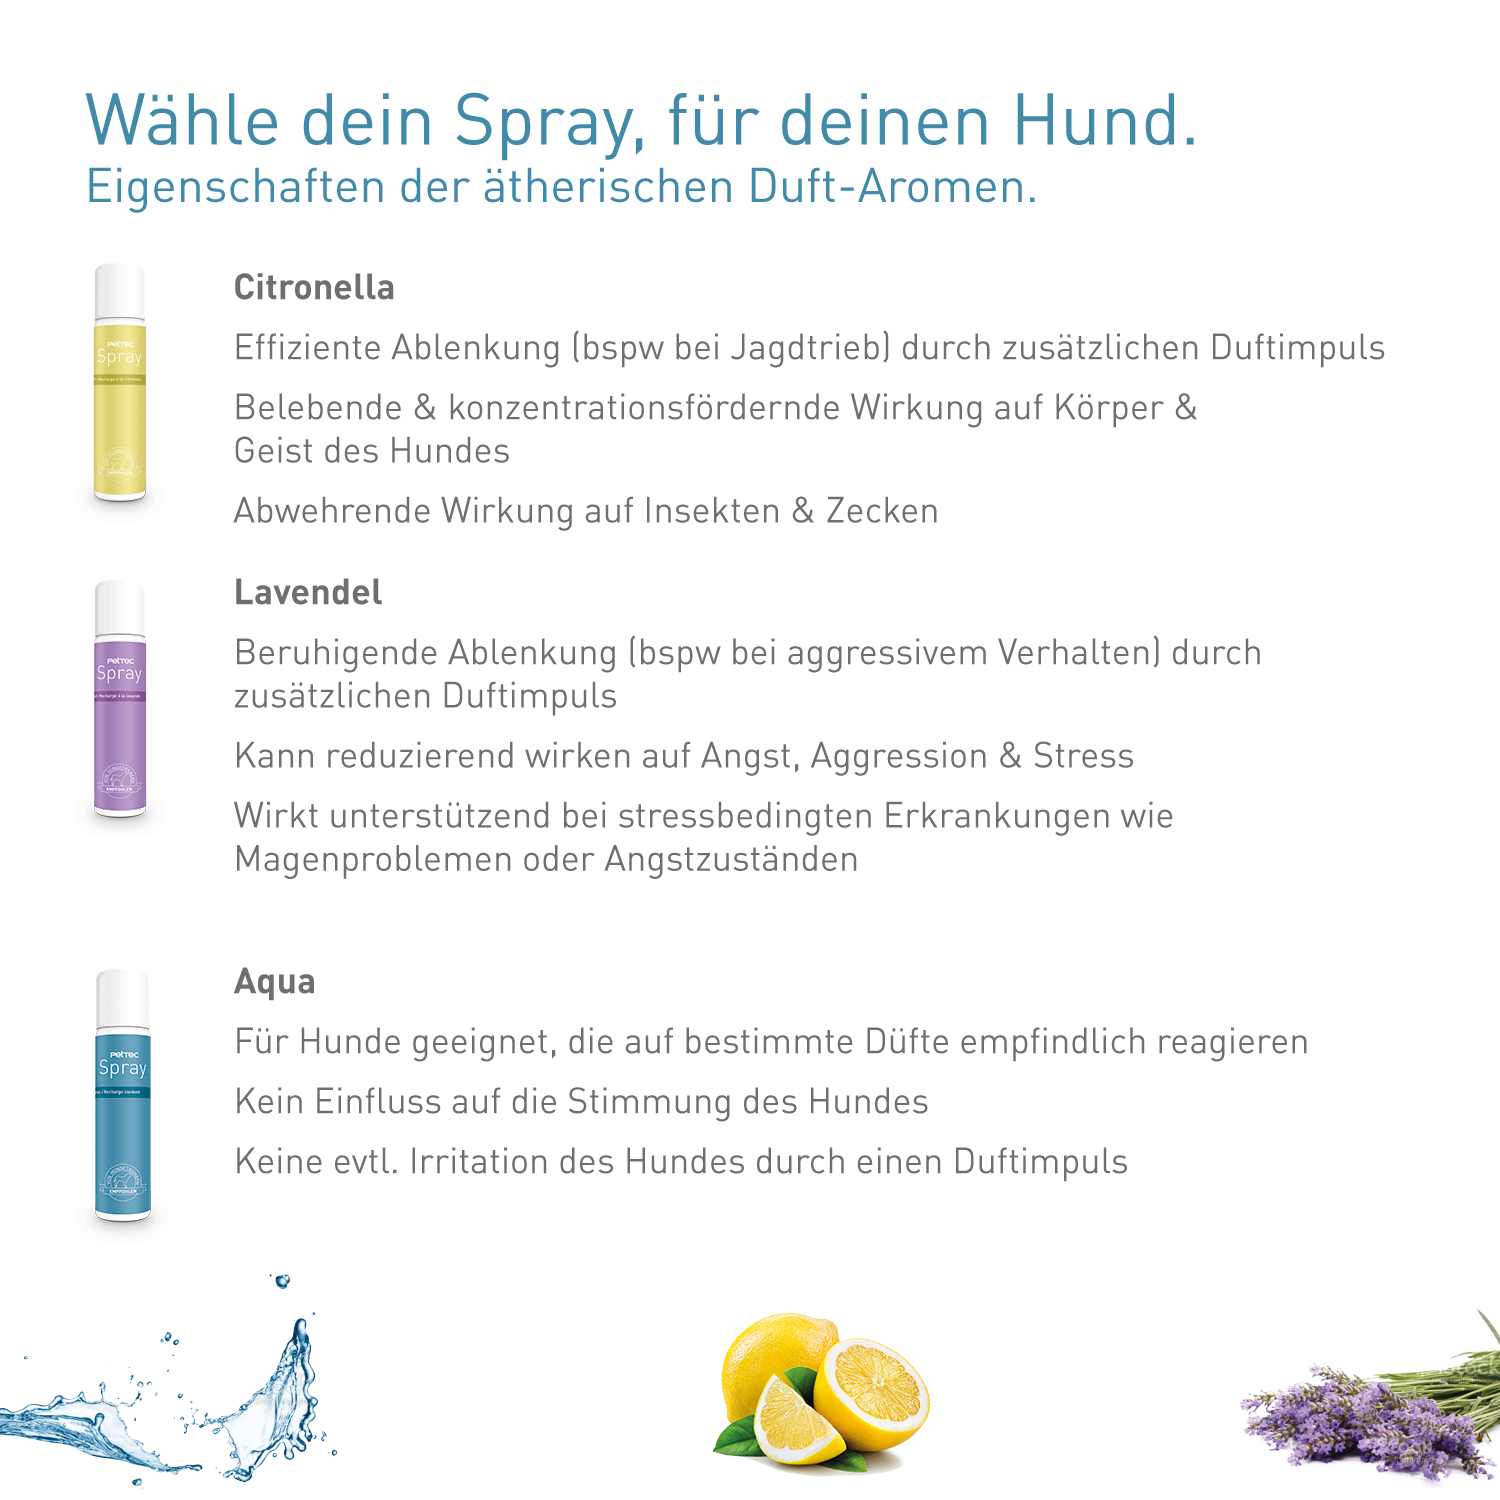 PetTec Nachfüllspray für Hundetrainer - Aqua-Spray